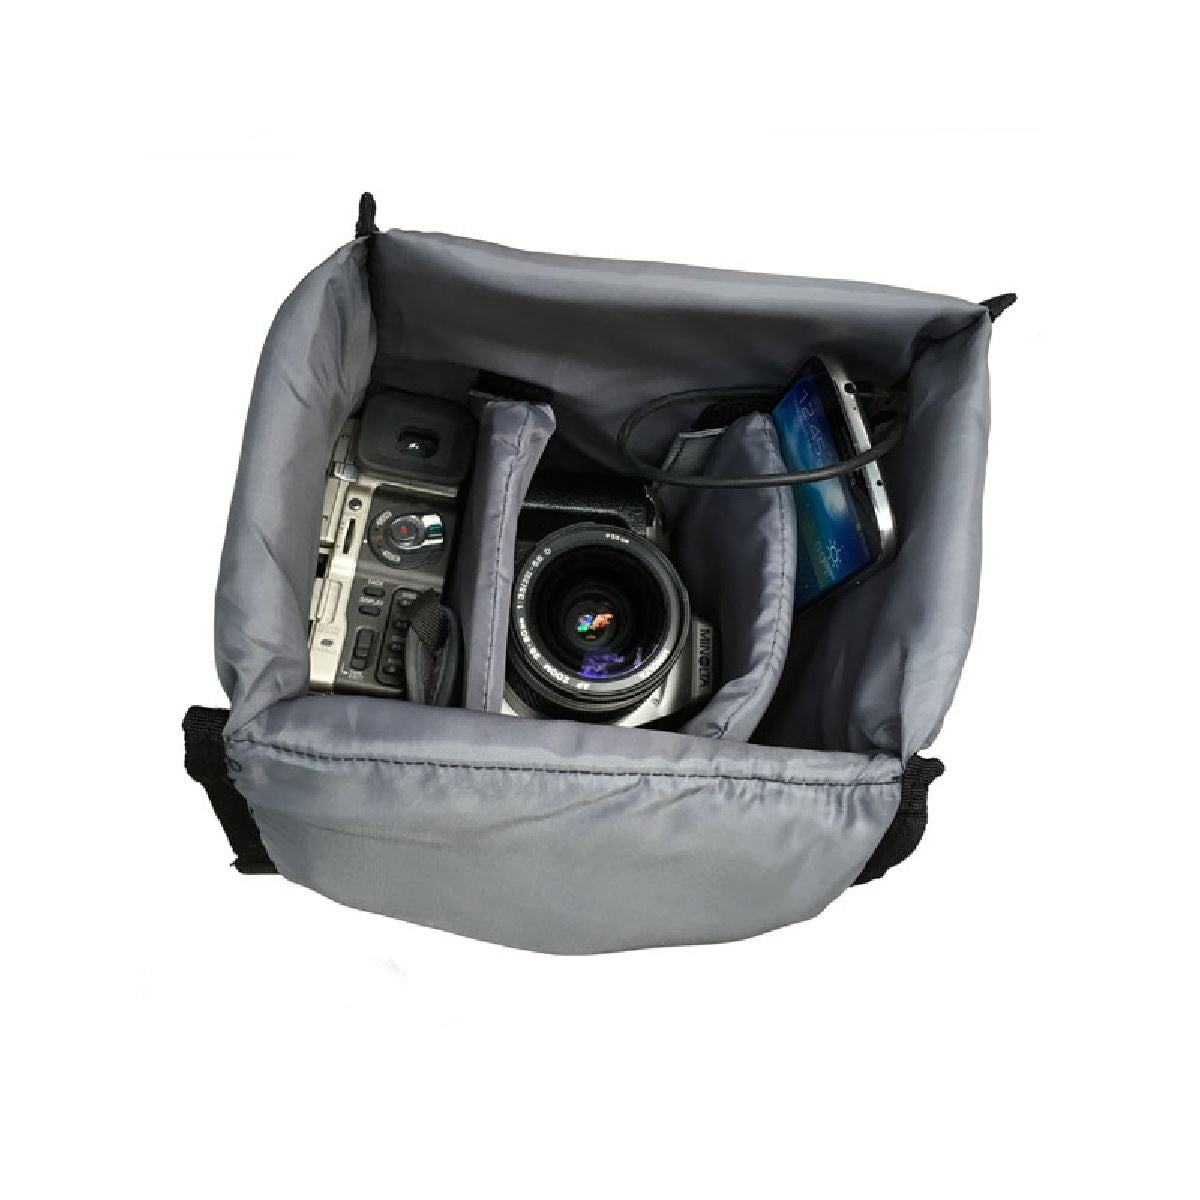 Aquapac: Stormproof Waterproof DSLR Camera Pouch - Outdoor Travel Gear 5